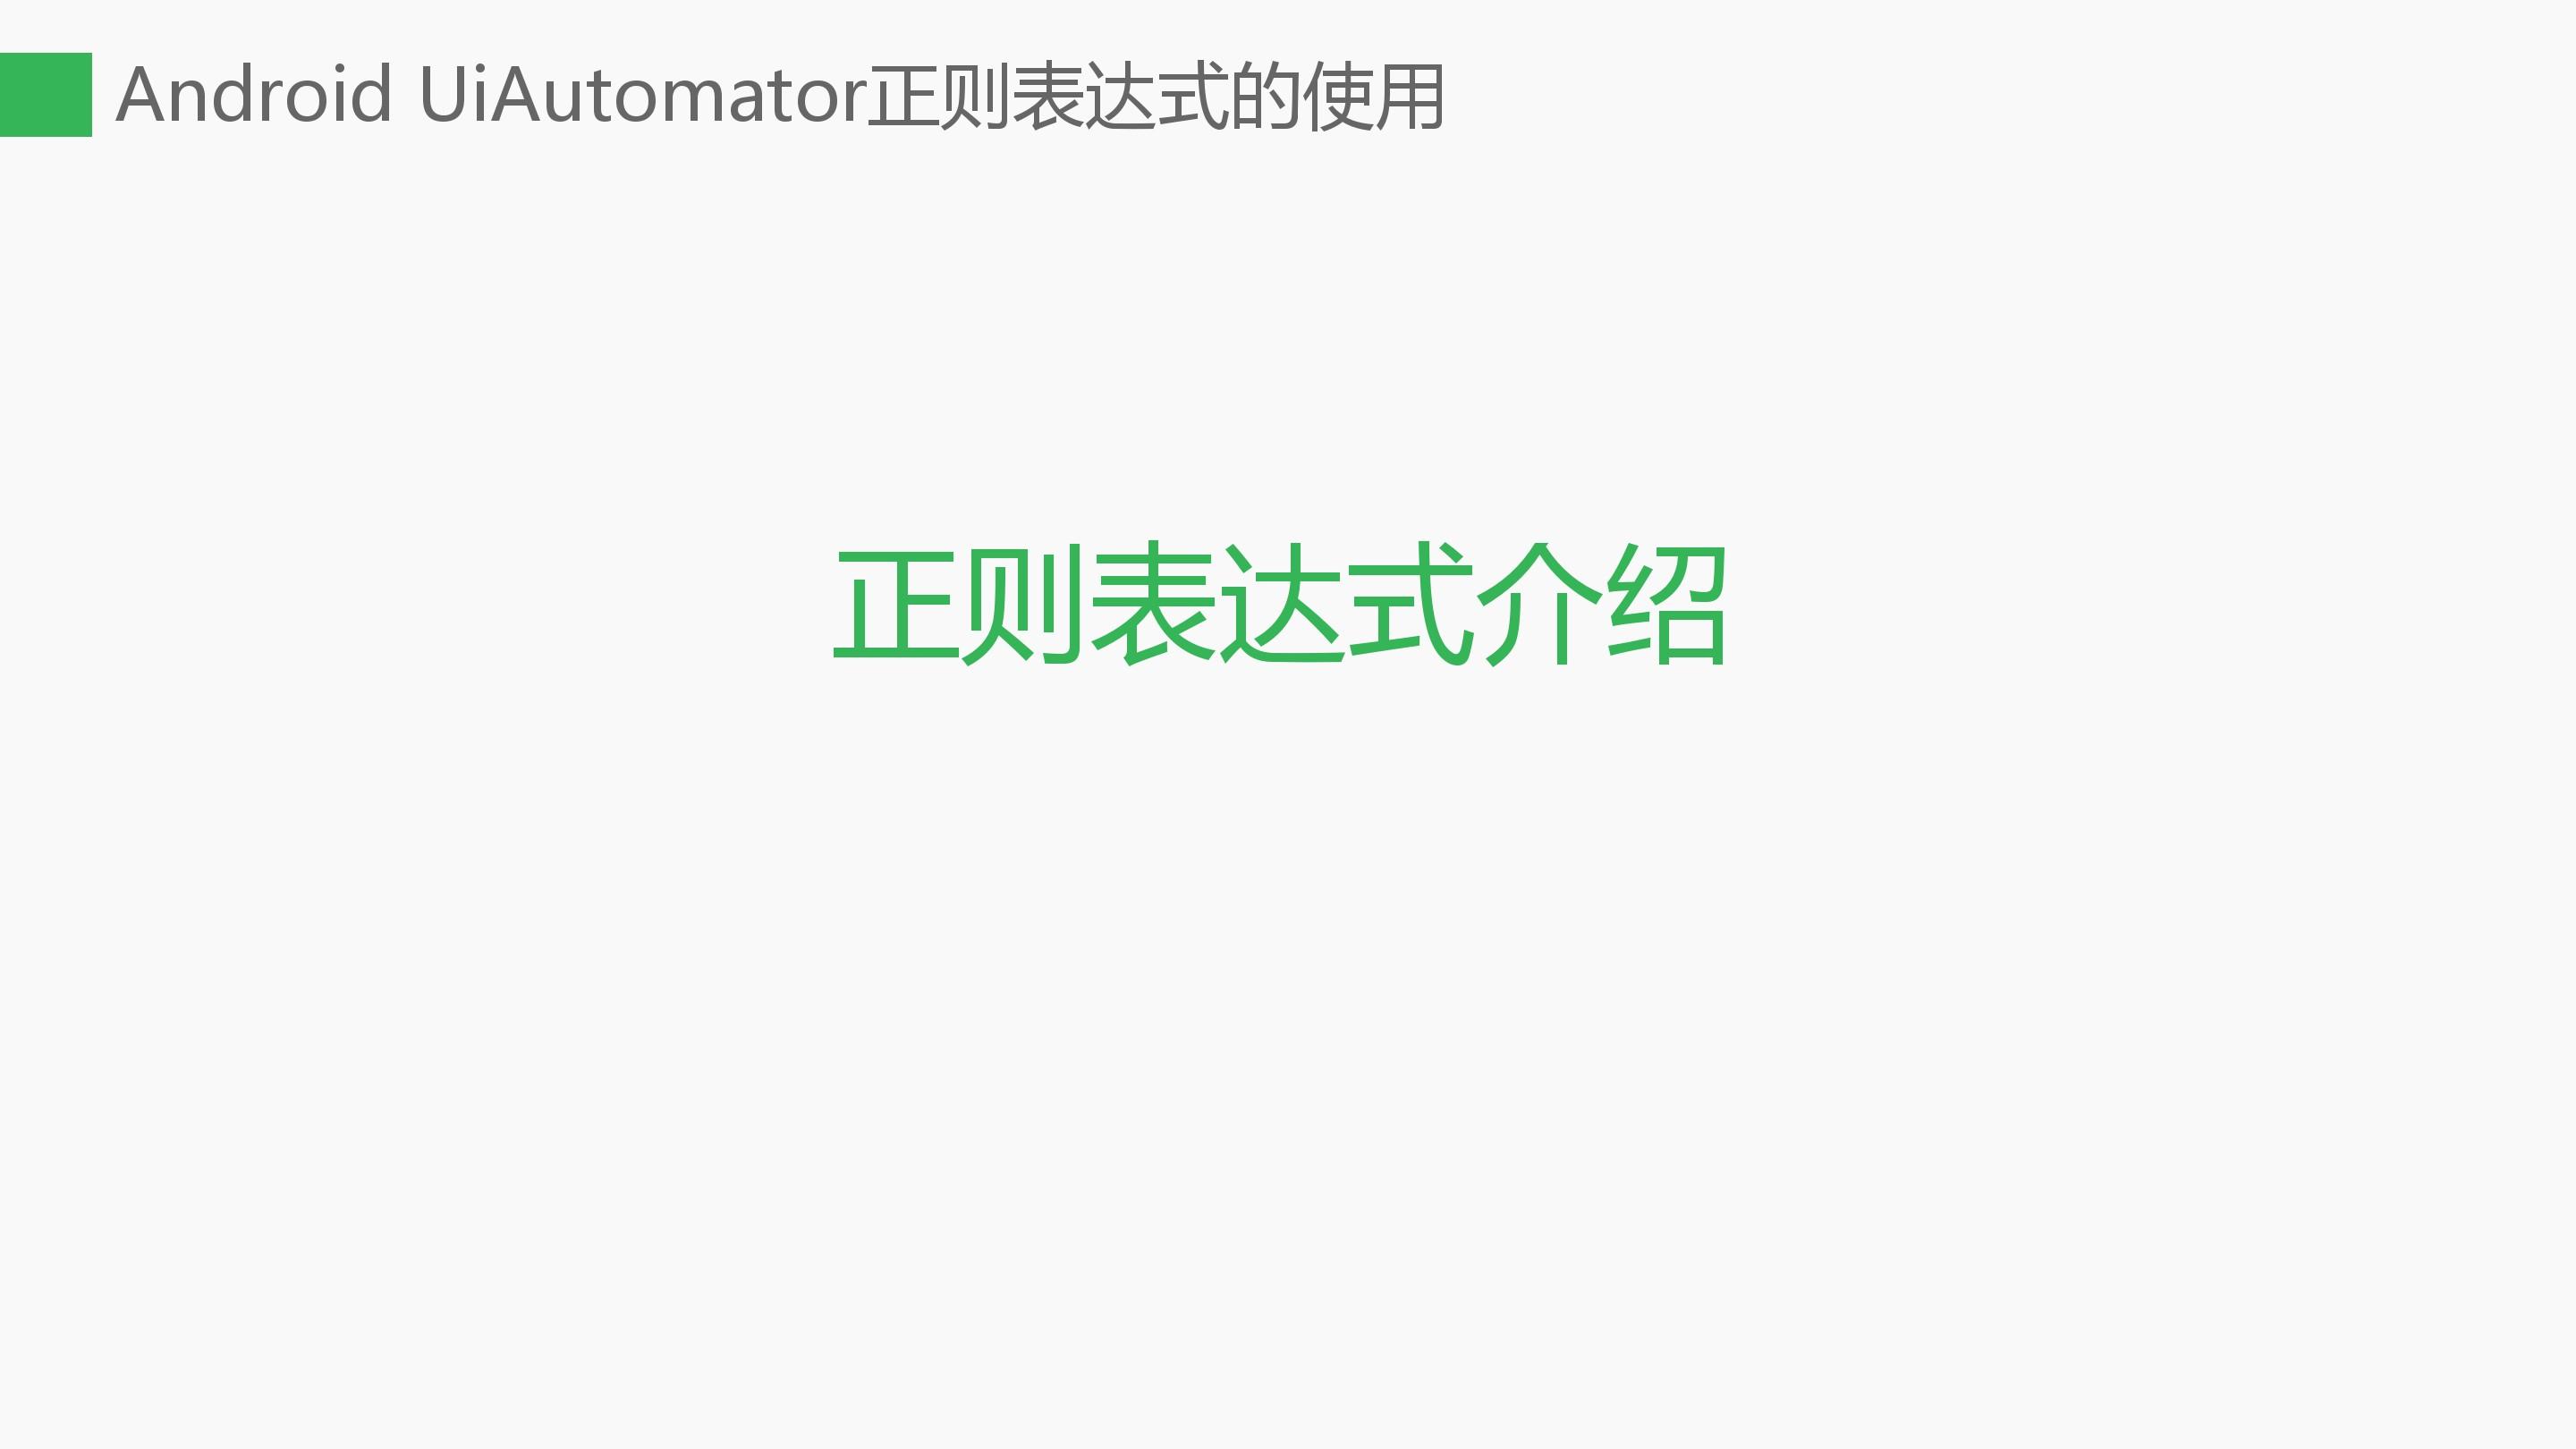 11-Android UiAutomator 正则表达式的使用_v1.1